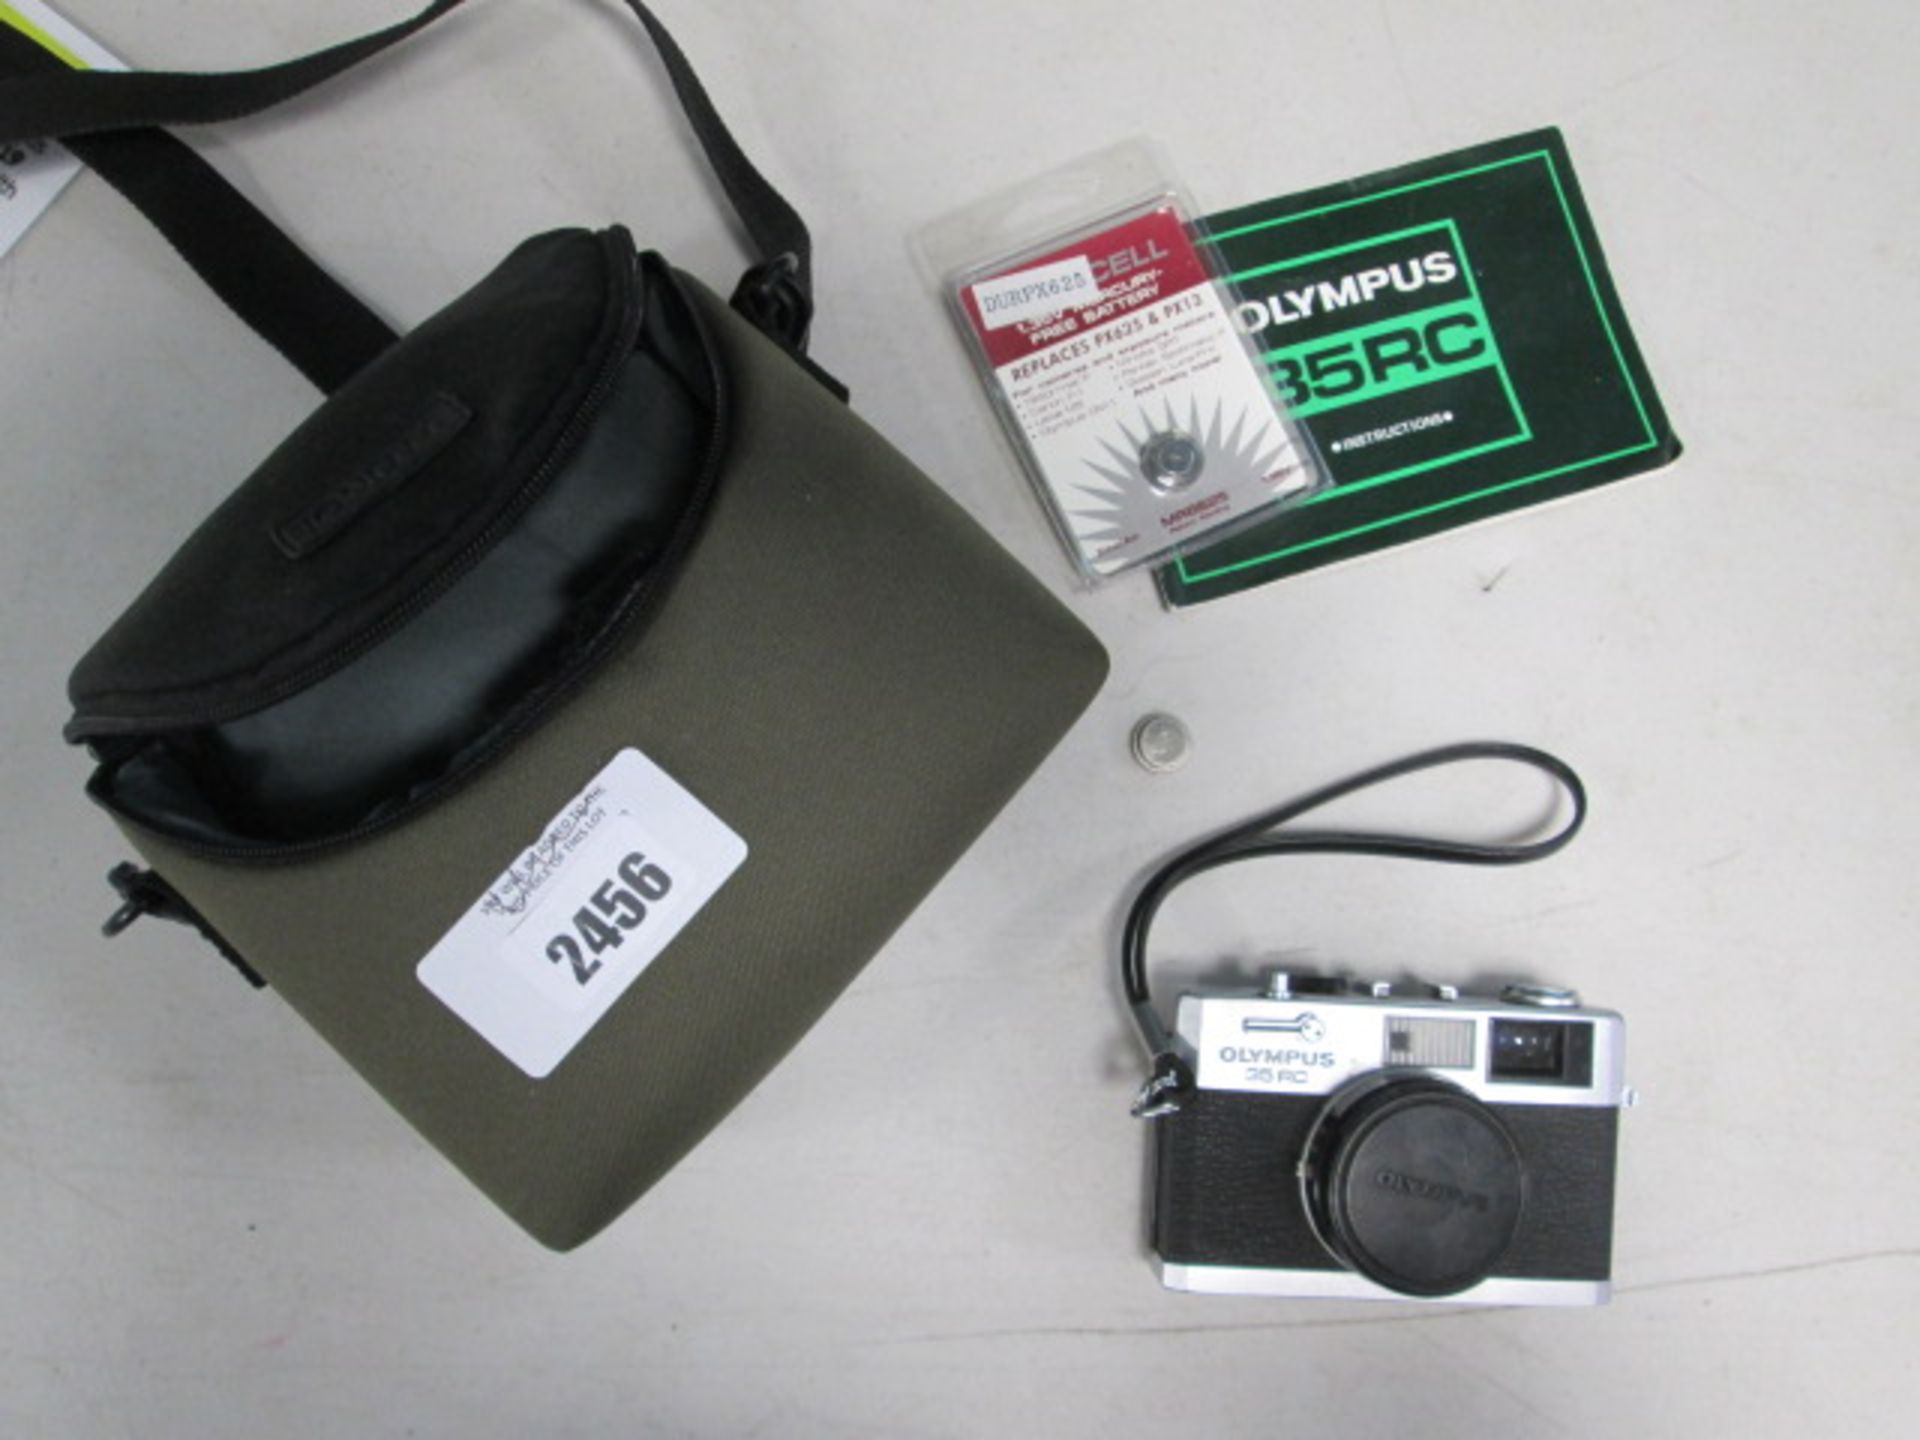 Olympus 35R6 film camera with travel case